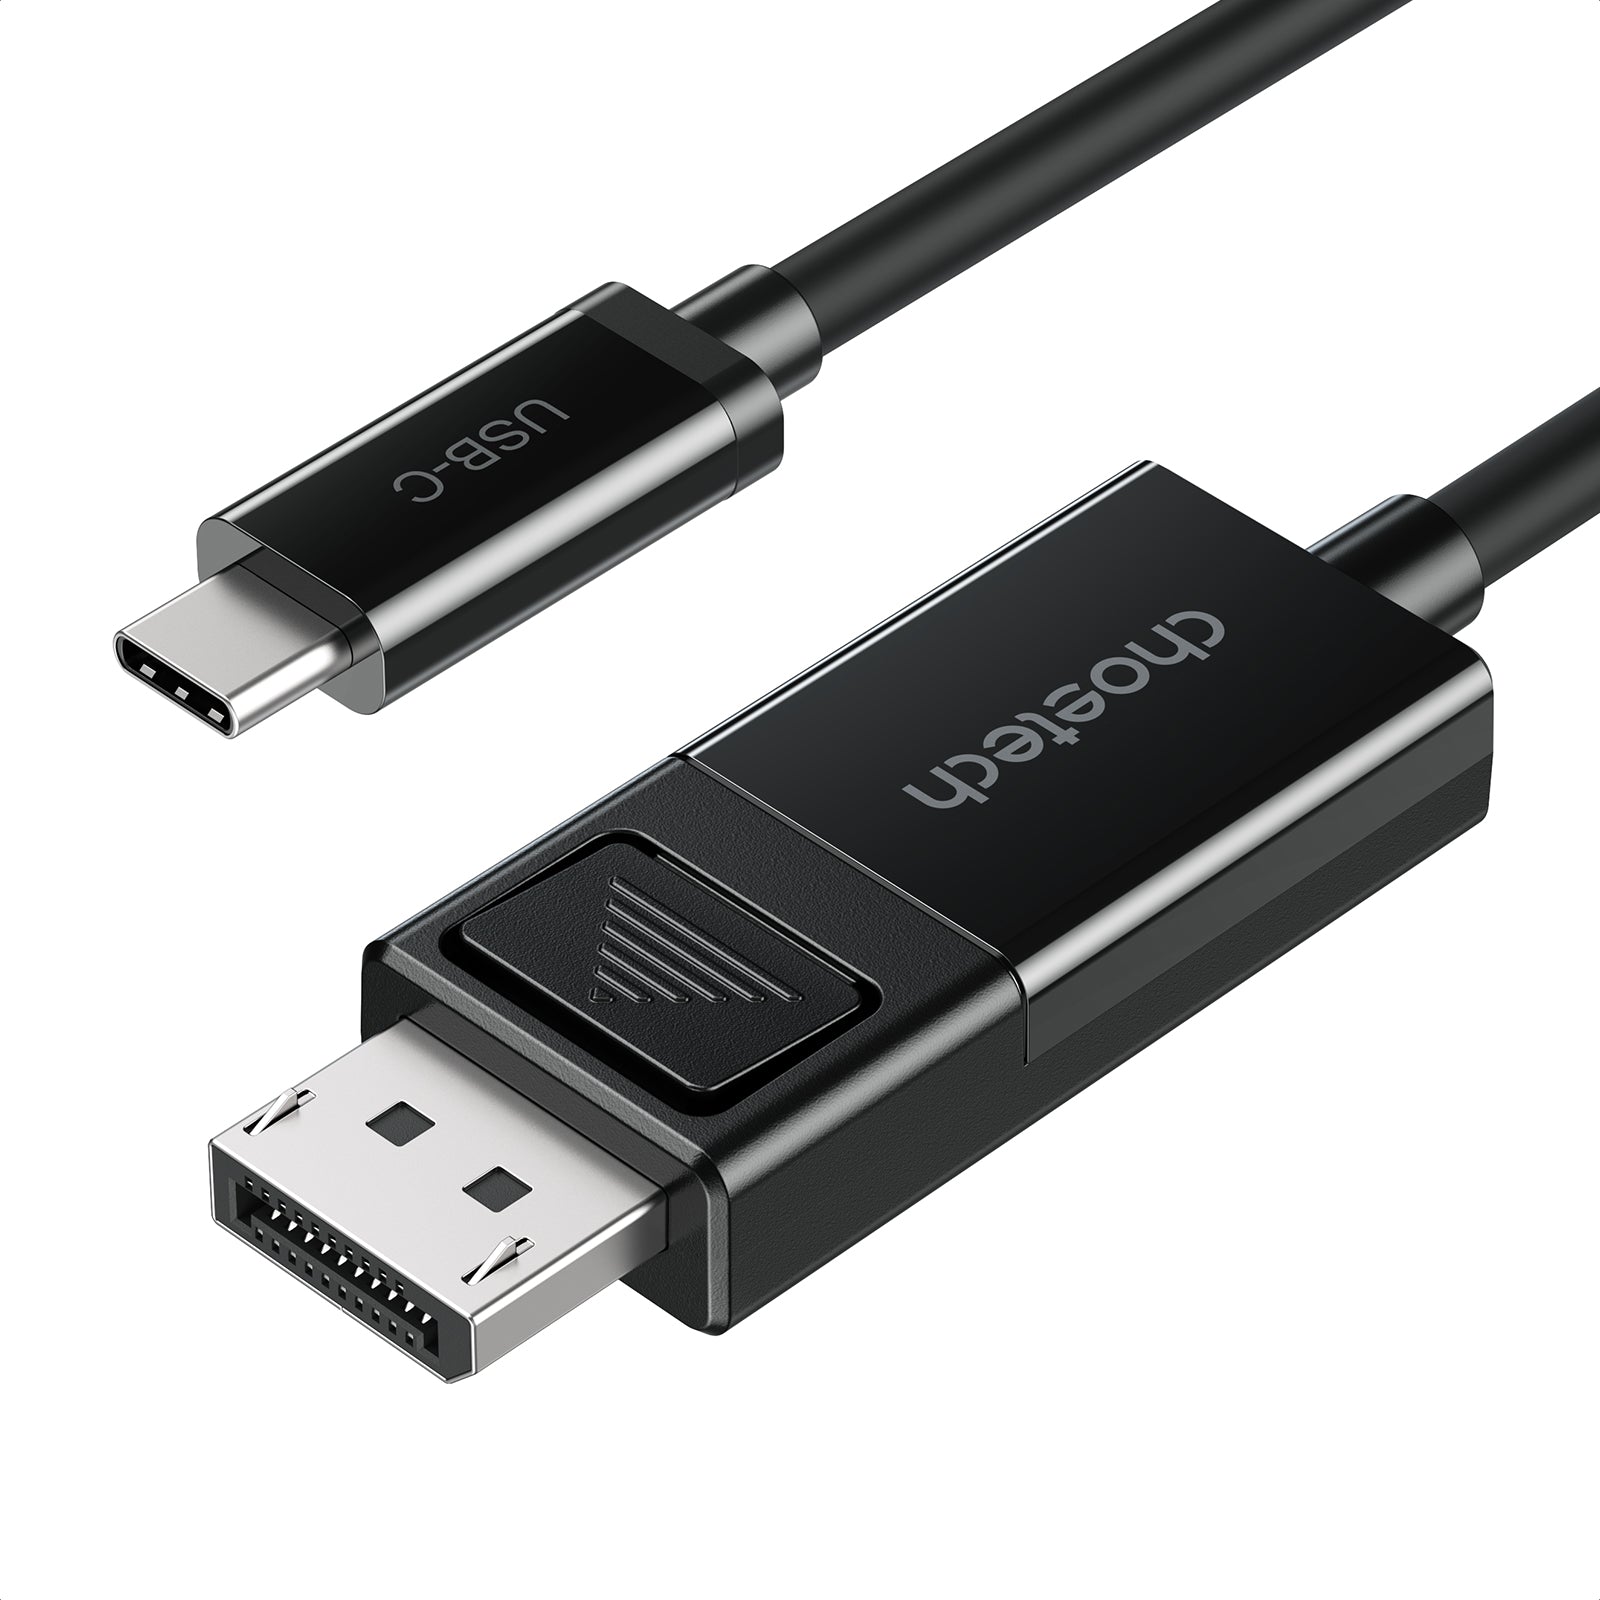 XCP-1803 Choetech USB C a DisplayPort Cable, 8K@30Hz 6ft DisplayPort a USB C Cable, Thunderbolt 3 a DisplayPort bidireccional